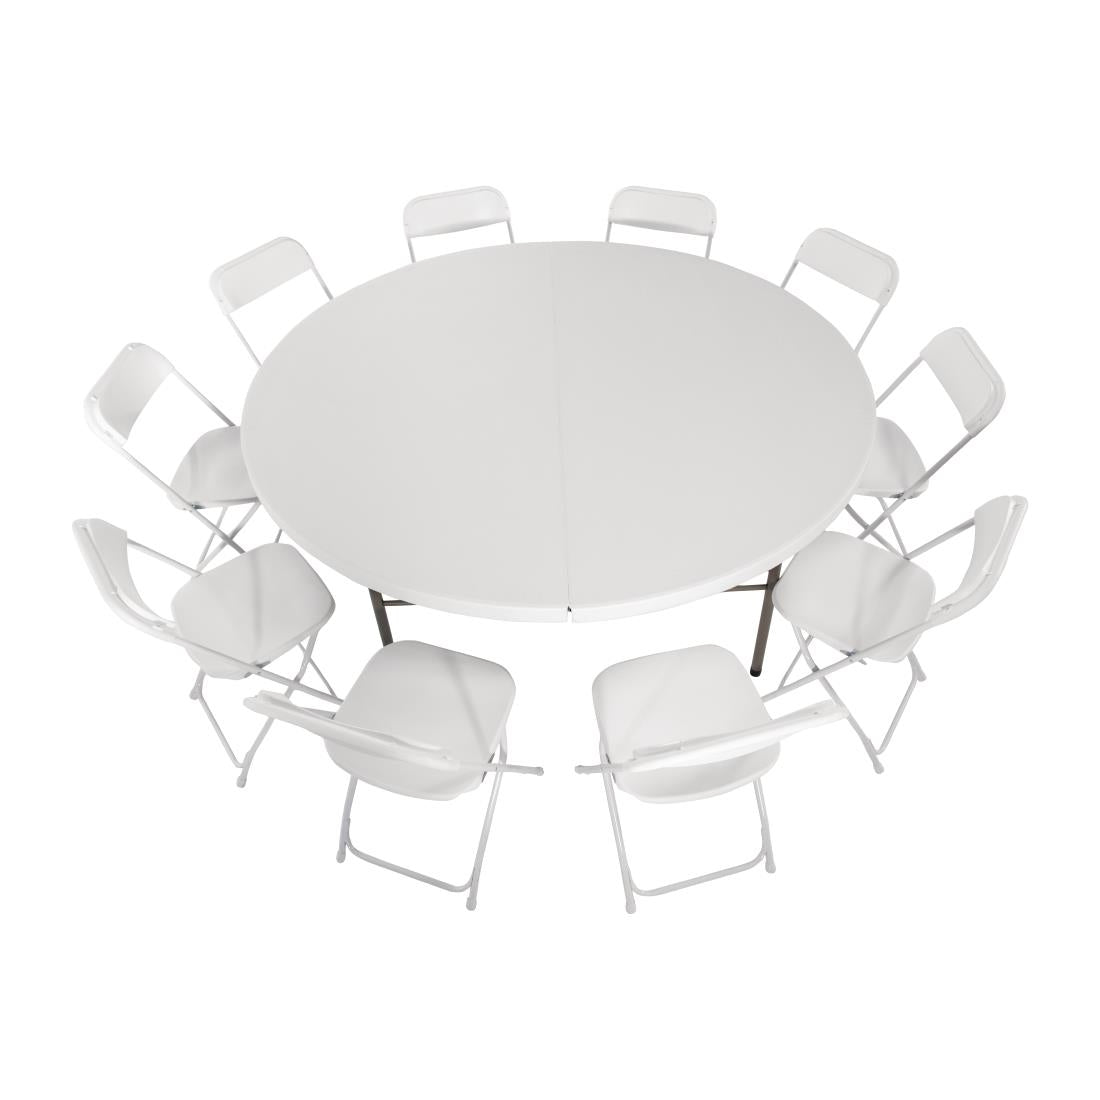 Bolero Round PE Centre Folding Table White 6ft (Single) JD Catering Equipment Solutions Ltd